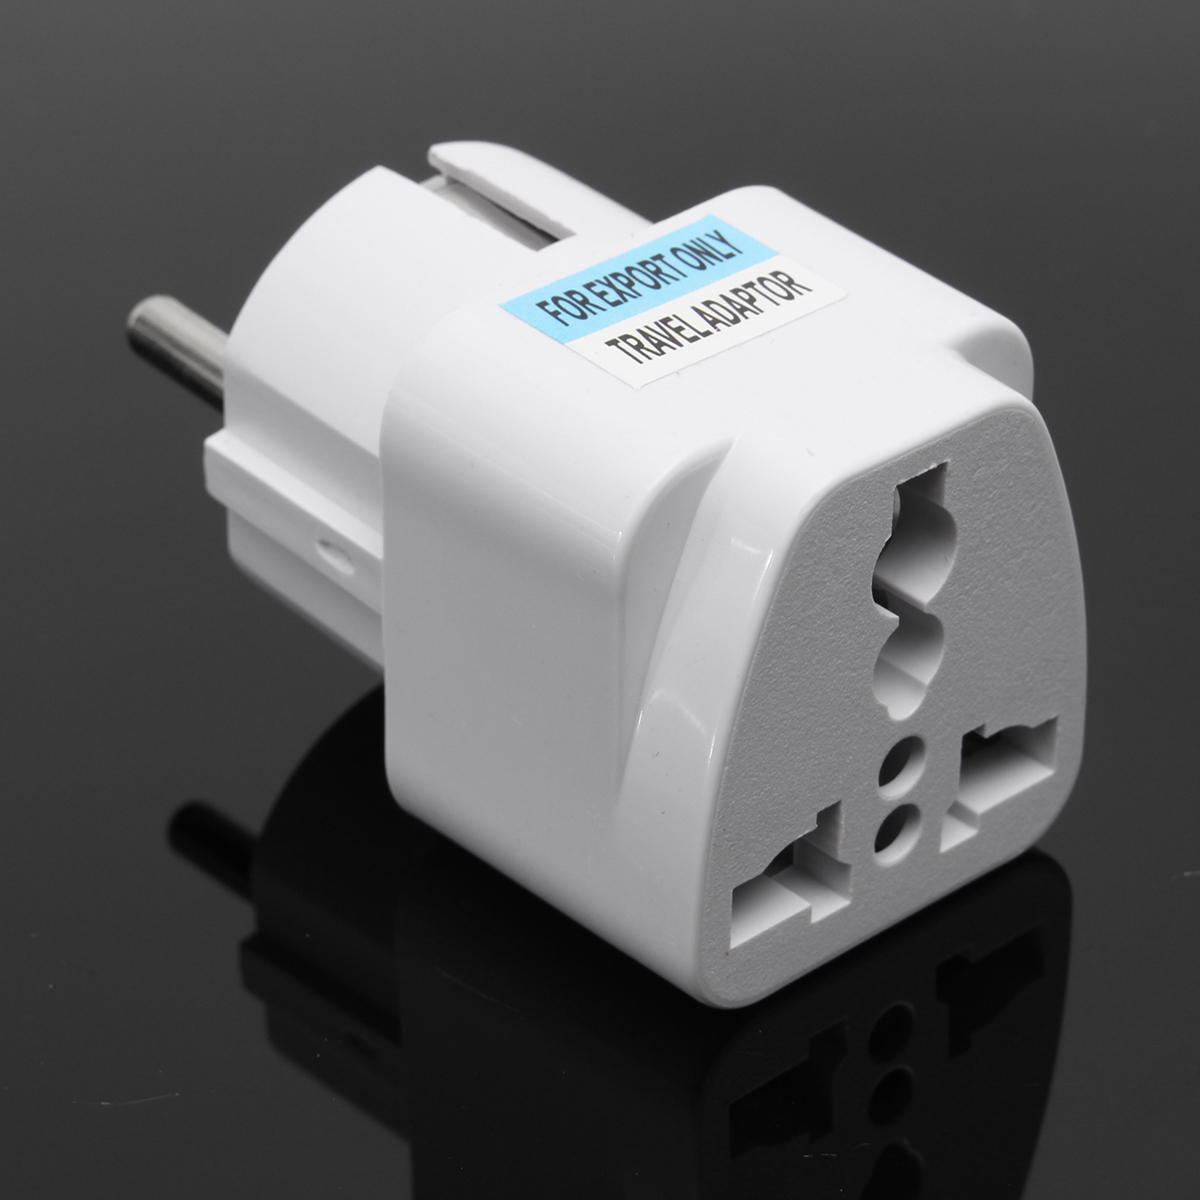 Travel-Universal-Power-Outlet-Adapter-UK-US-EU-AU-to-EU-Plug-Conversion-Plug-Socket-Converter-Connec-1141706